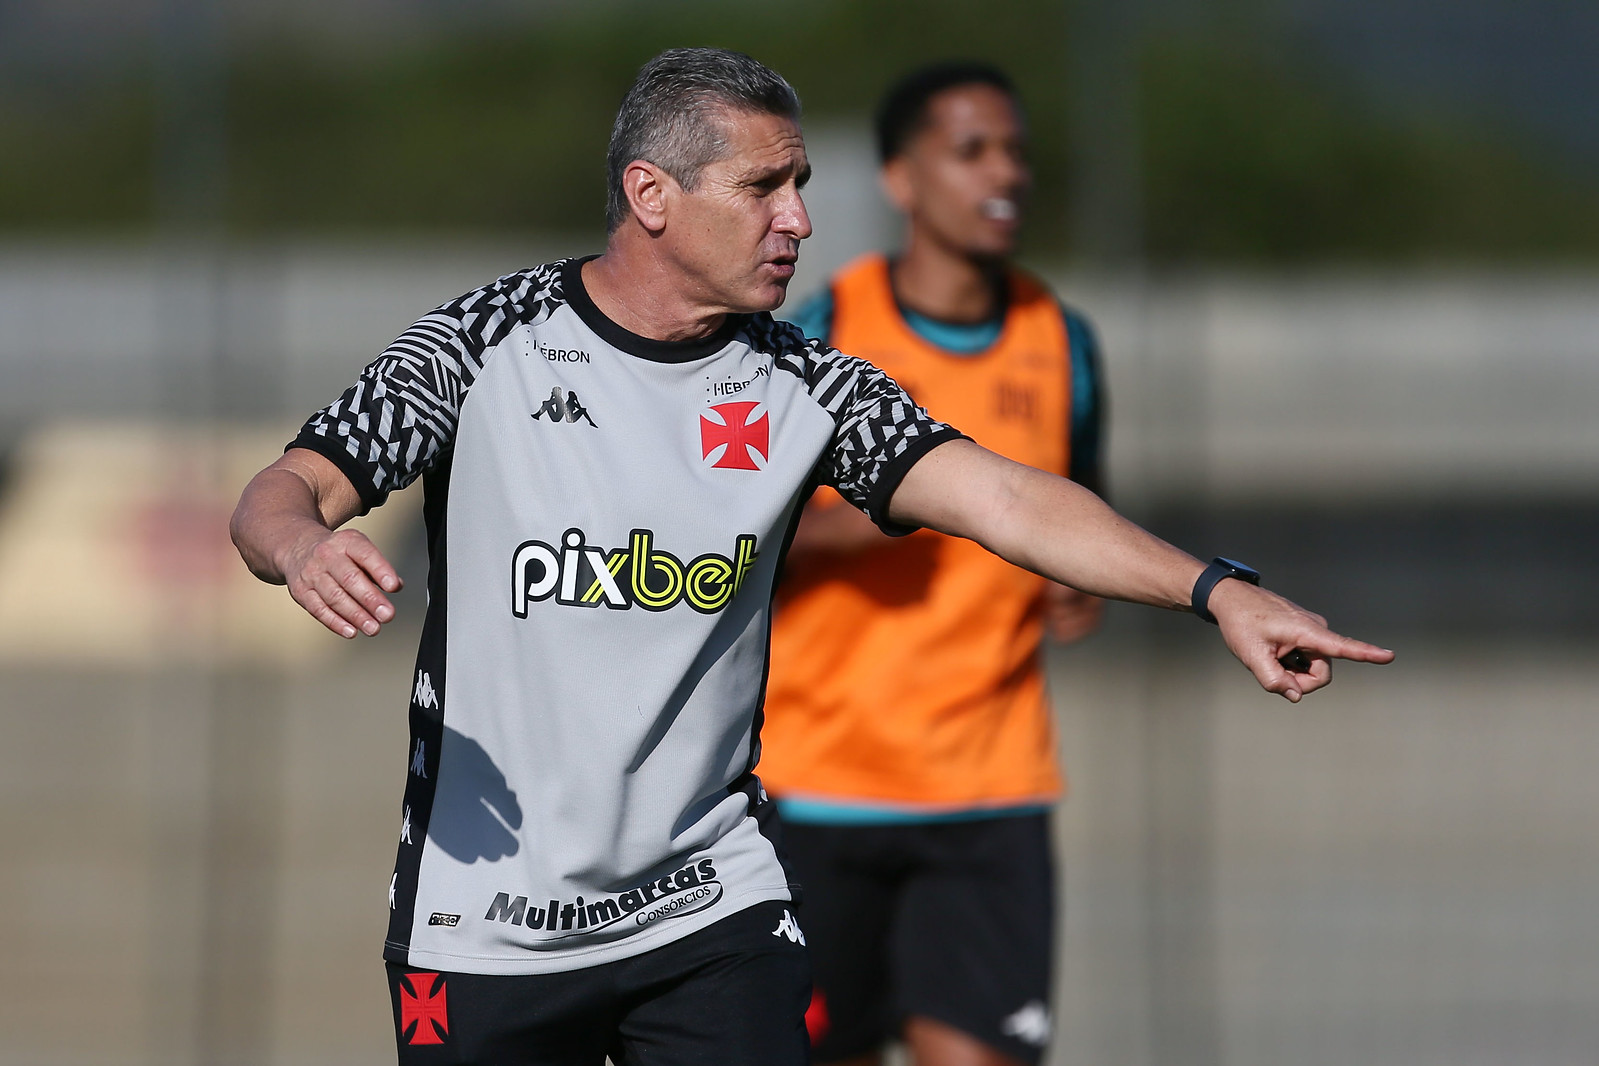 Landim vai pagar R$1,8 mi para craque fechar com Flamengo